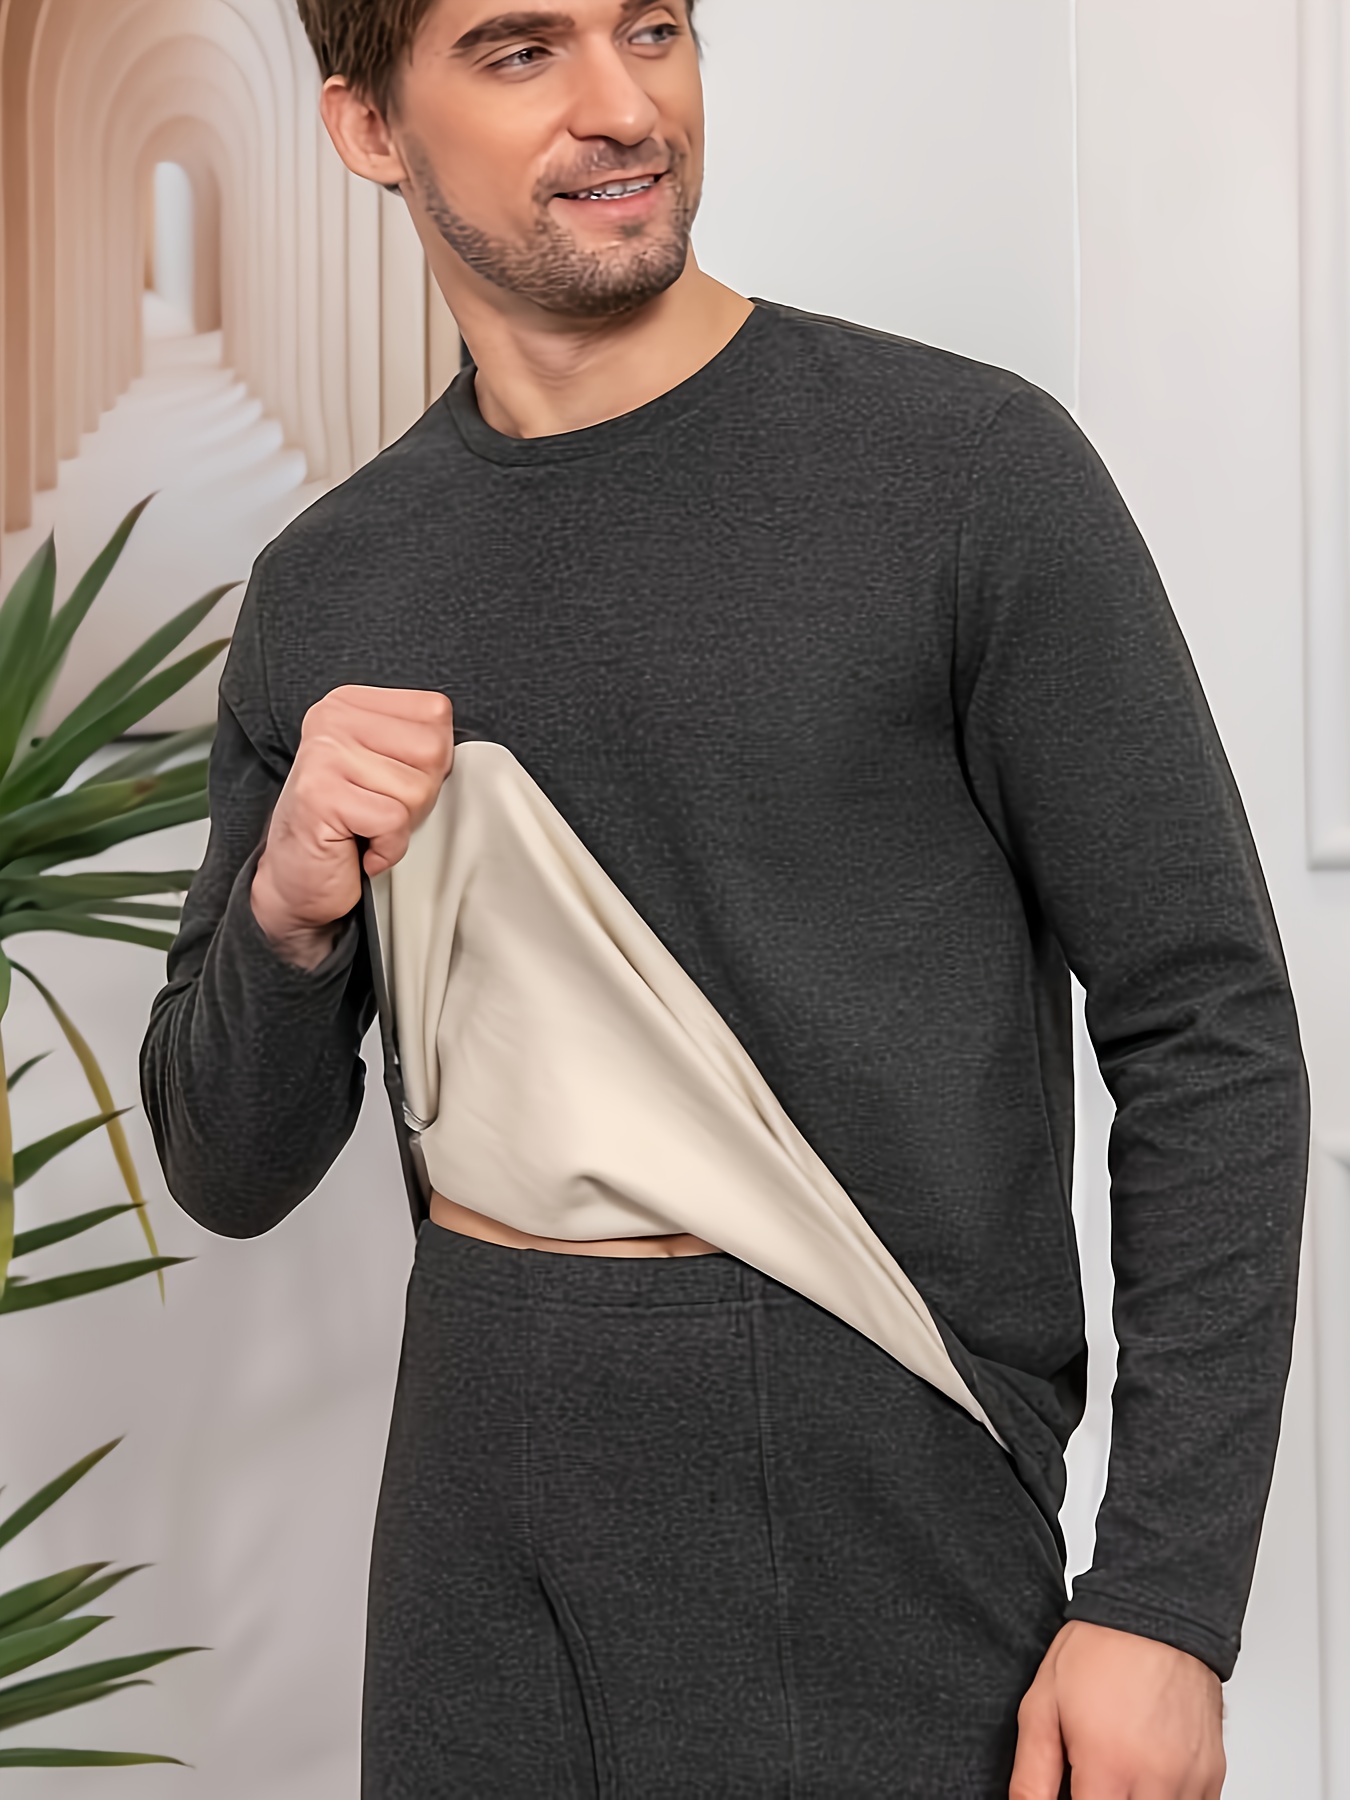 Camiseta manga larga térmica para hombre Tamago